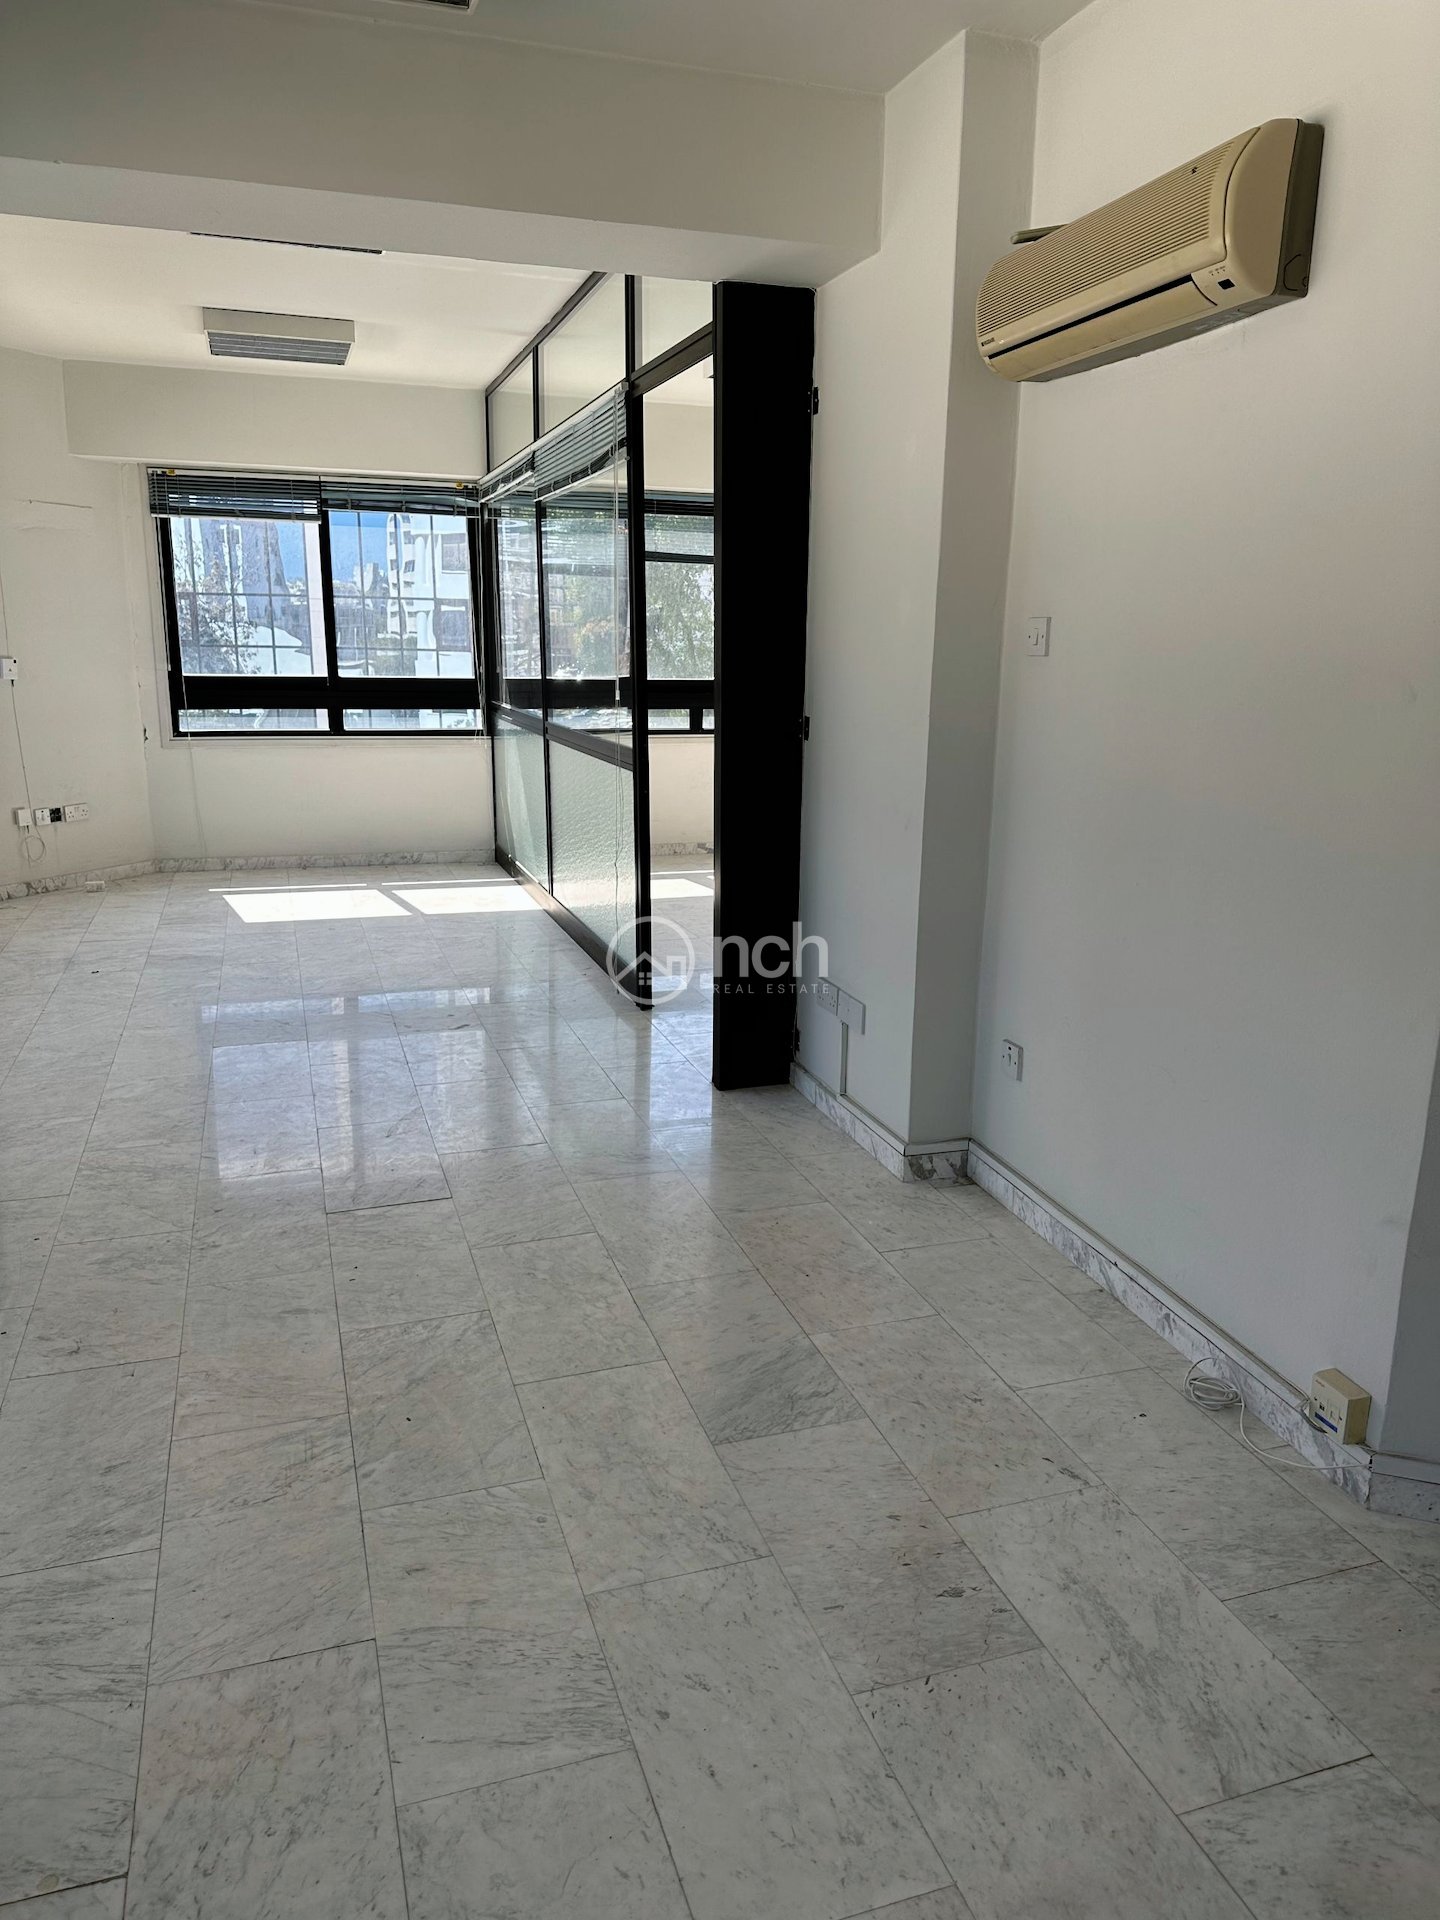 60m² Office for Rent in Nicosia – Trypiotis